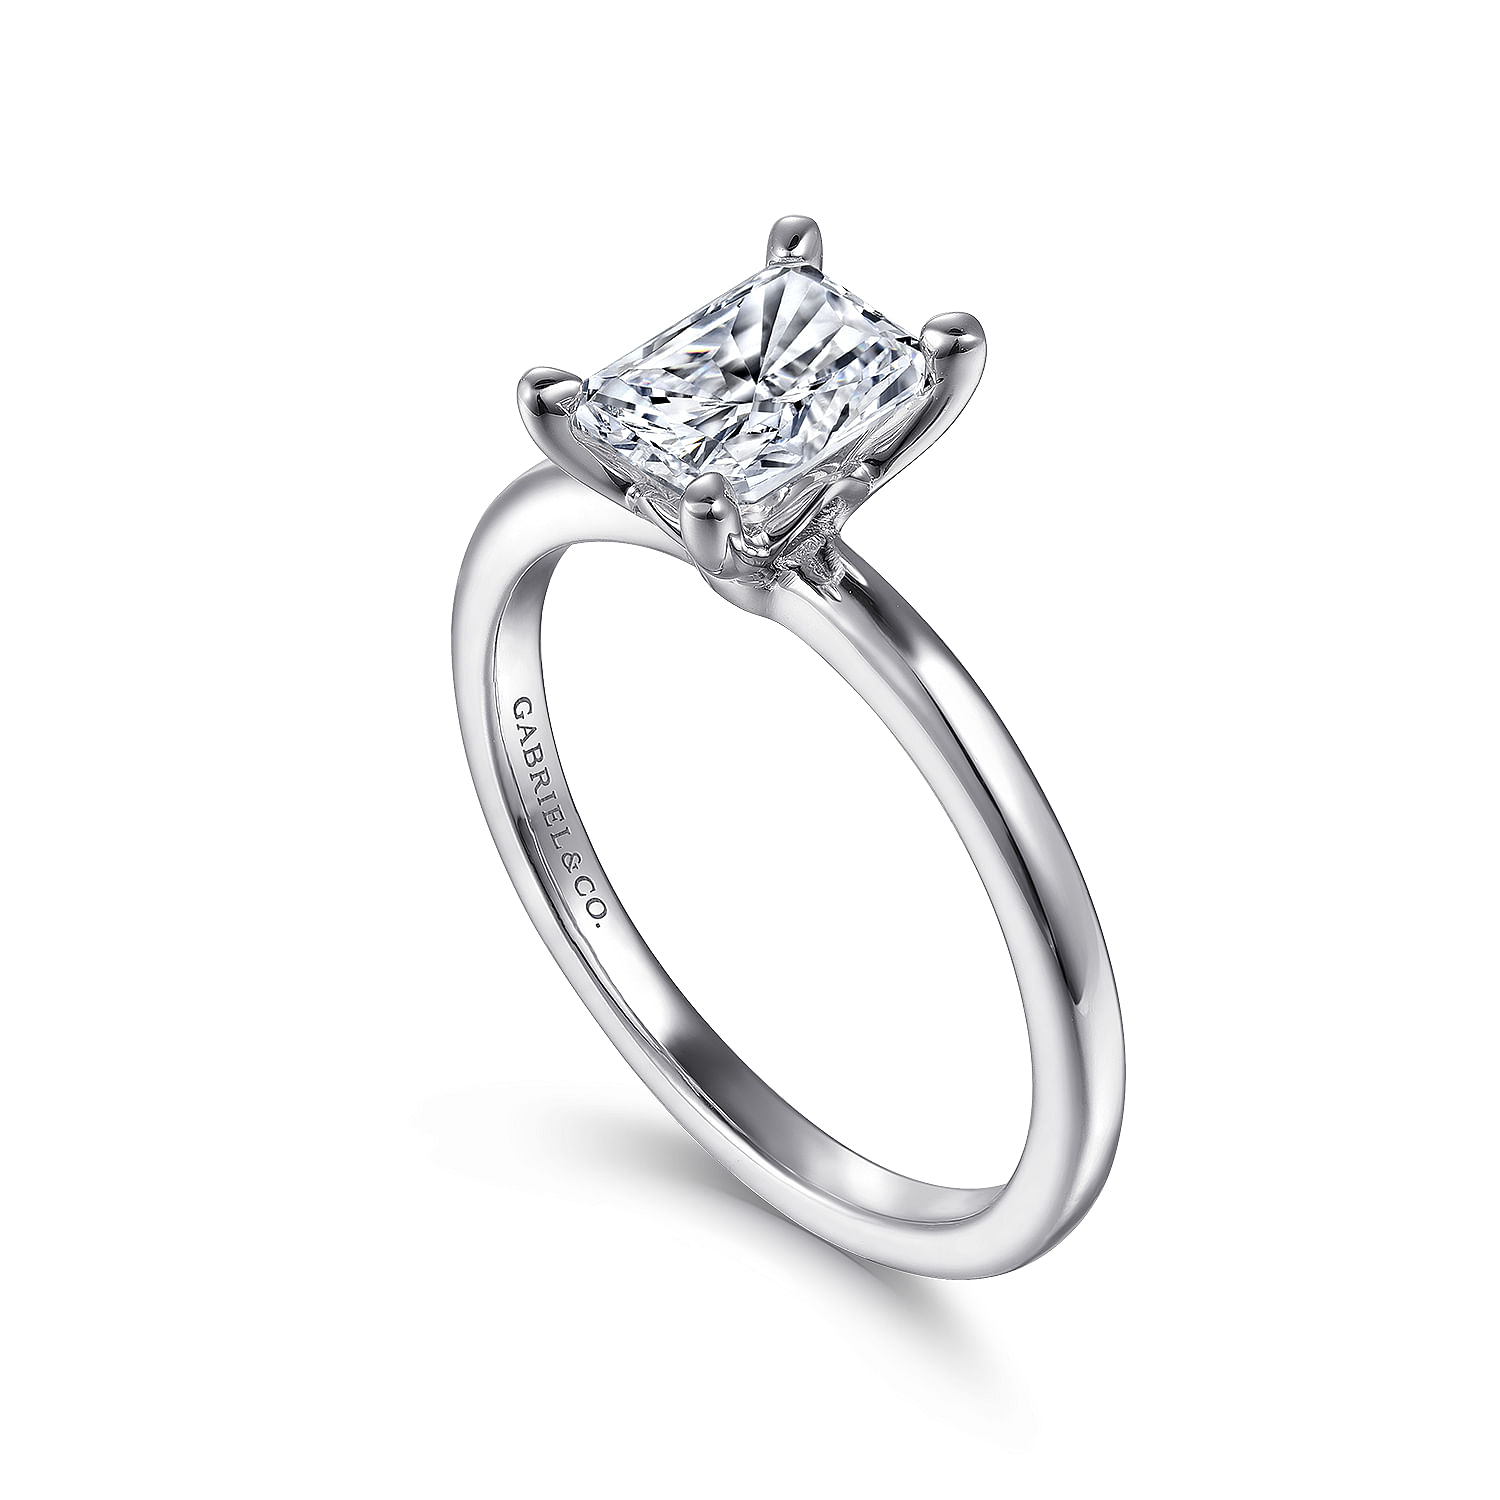 14K White Gold Rectangular Radiant Cut Diamond Engagement Ring